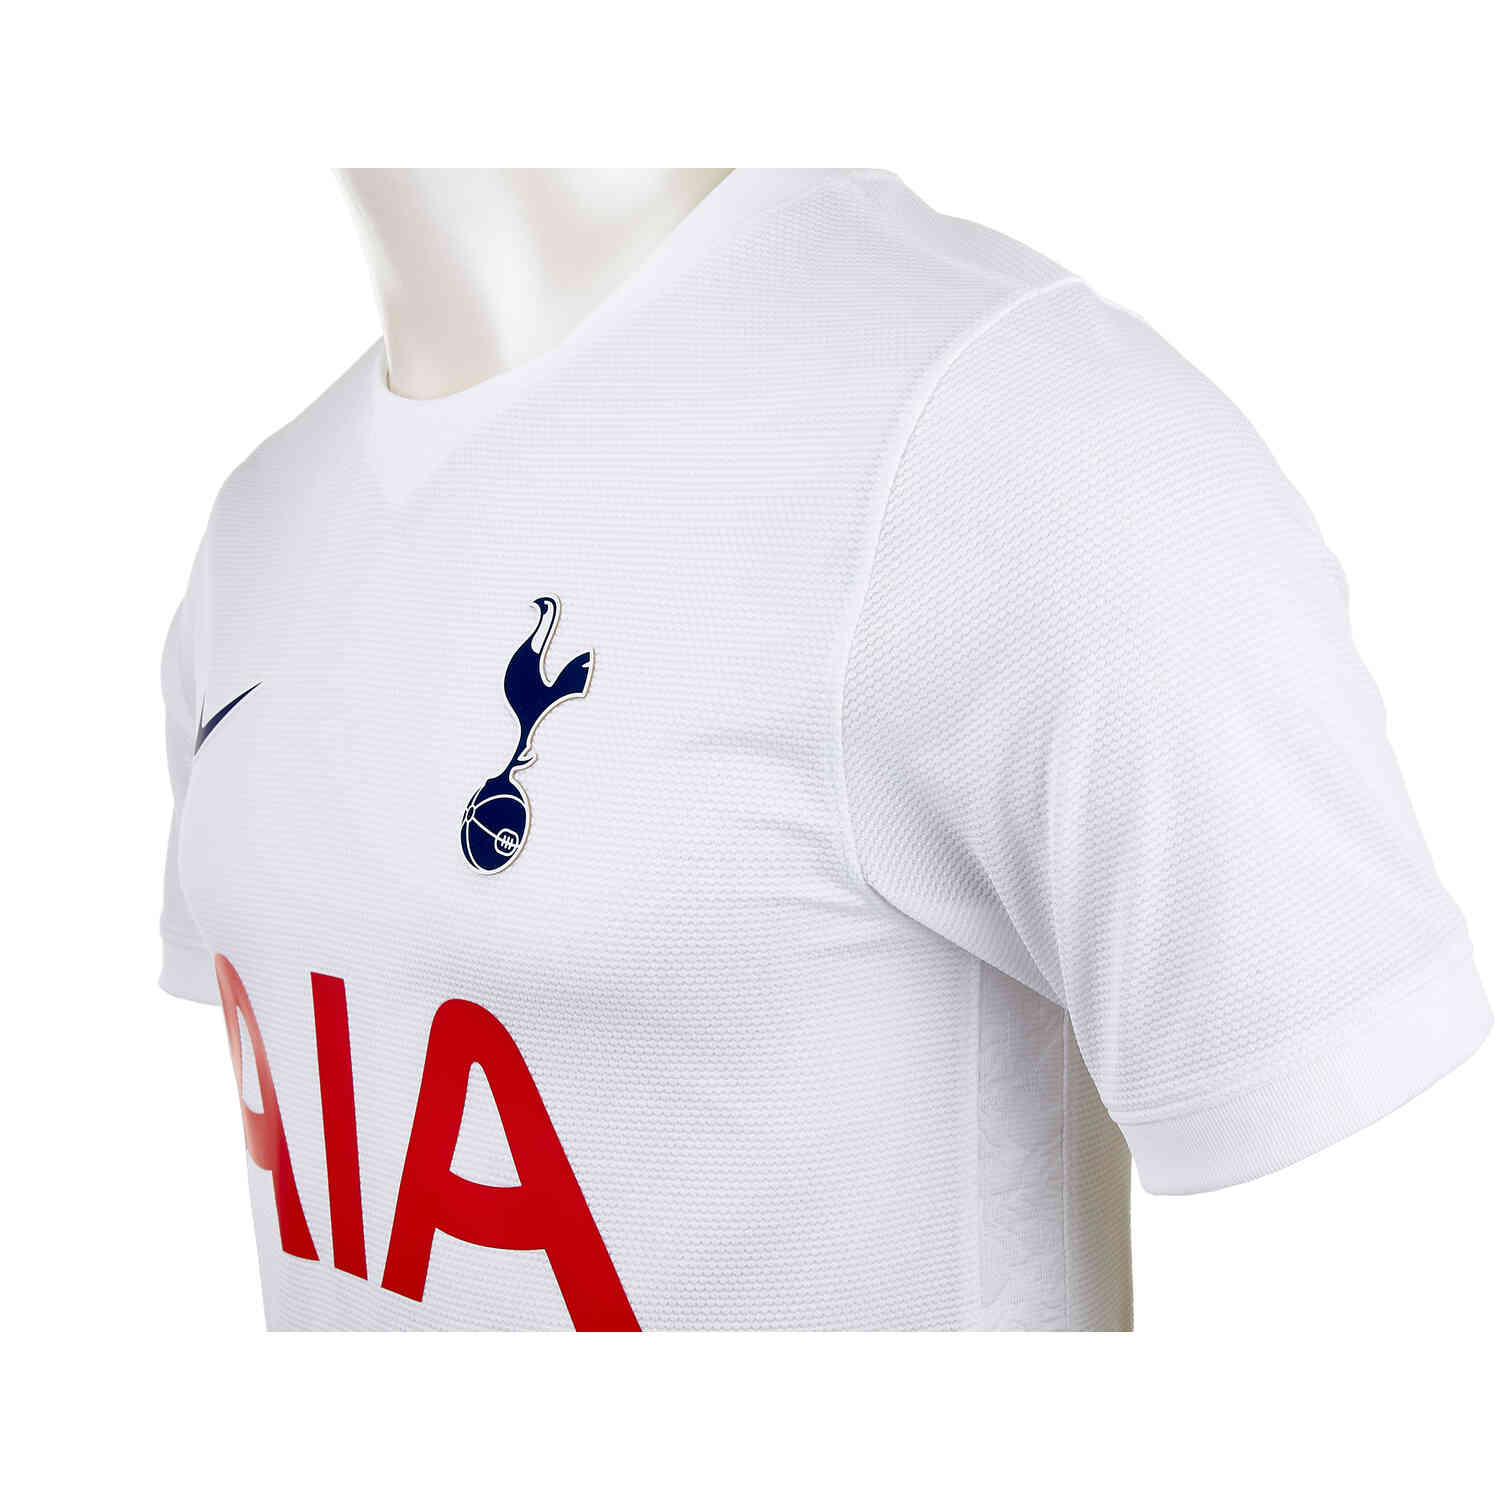 2021-22 Tottenham Hotspur Away Shirt SON#7 Official Football Name Number Set